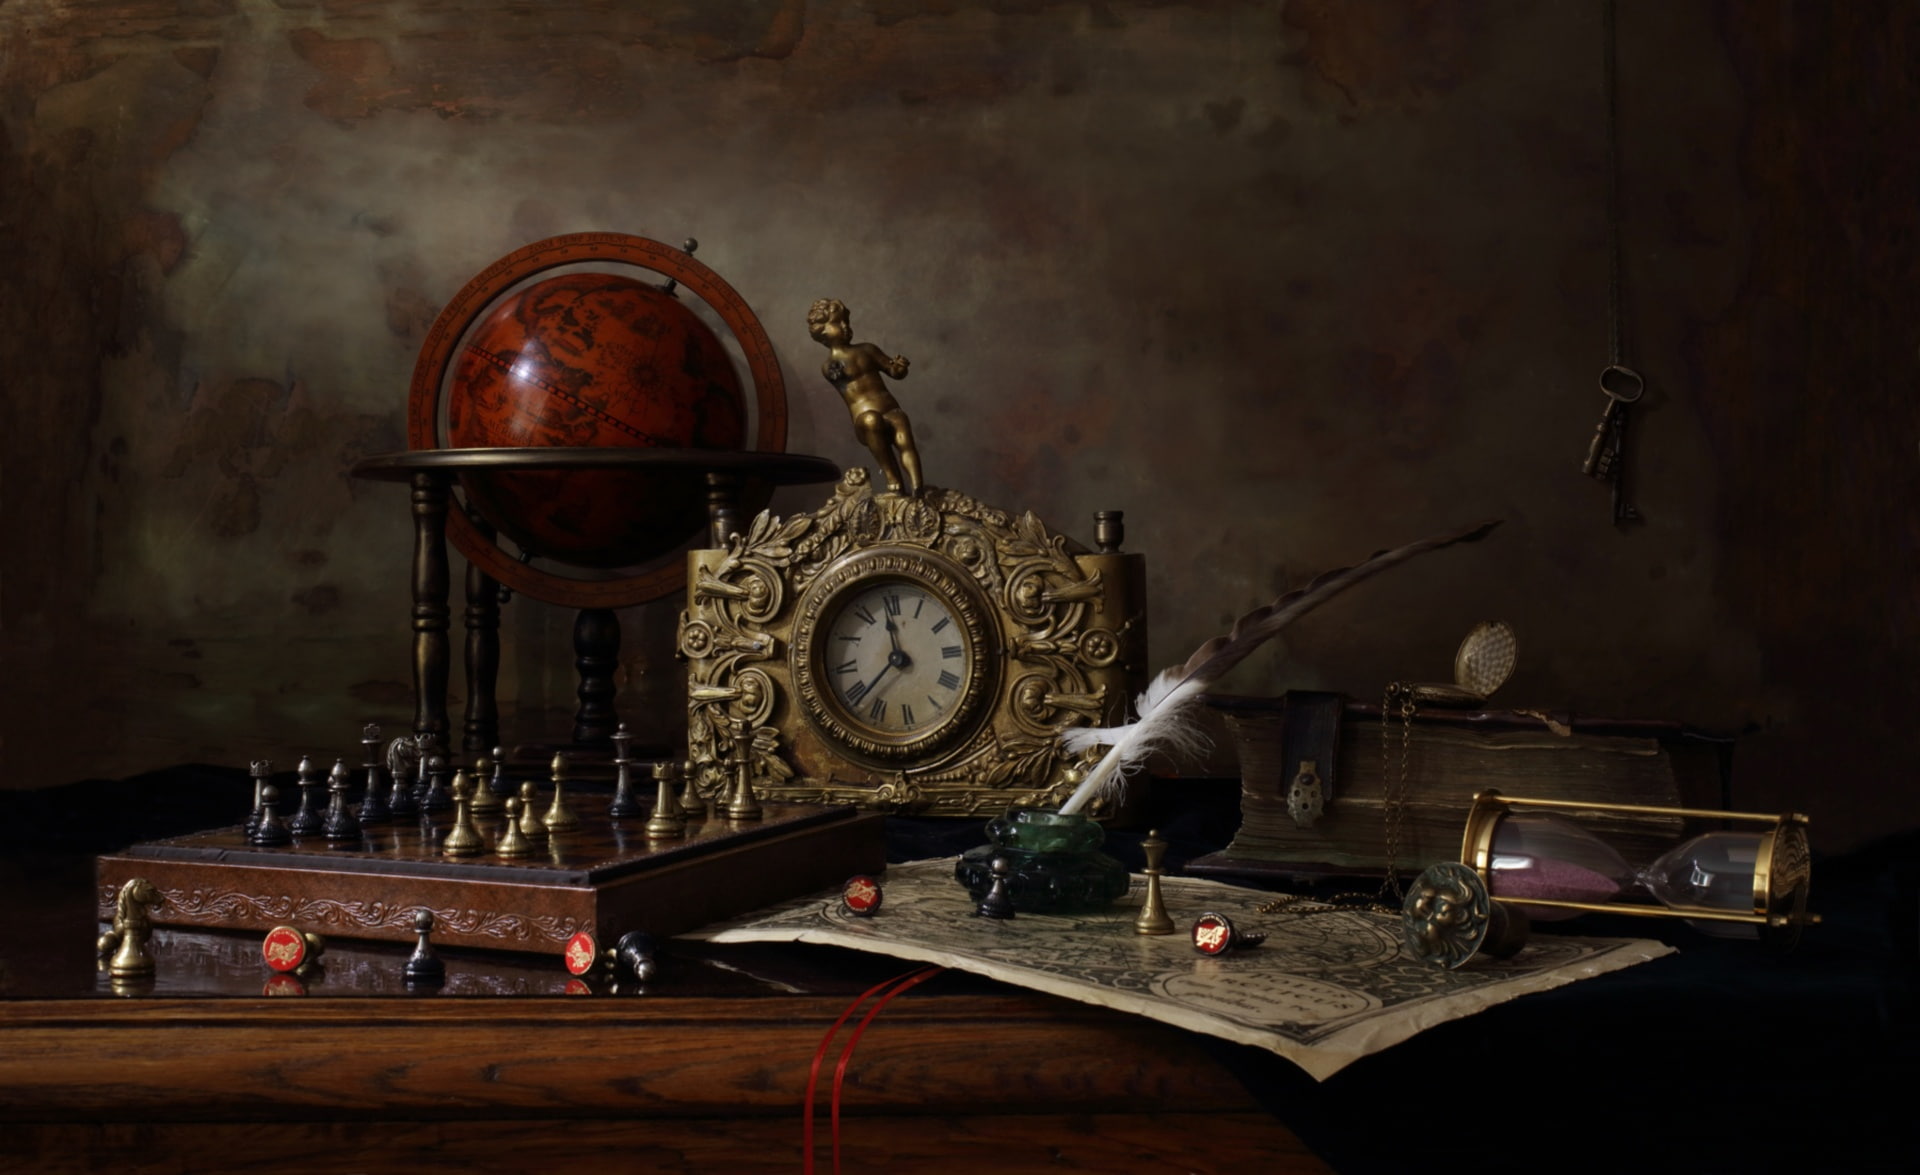 pen, watch, key, chess, figurine, still life, globe, ink